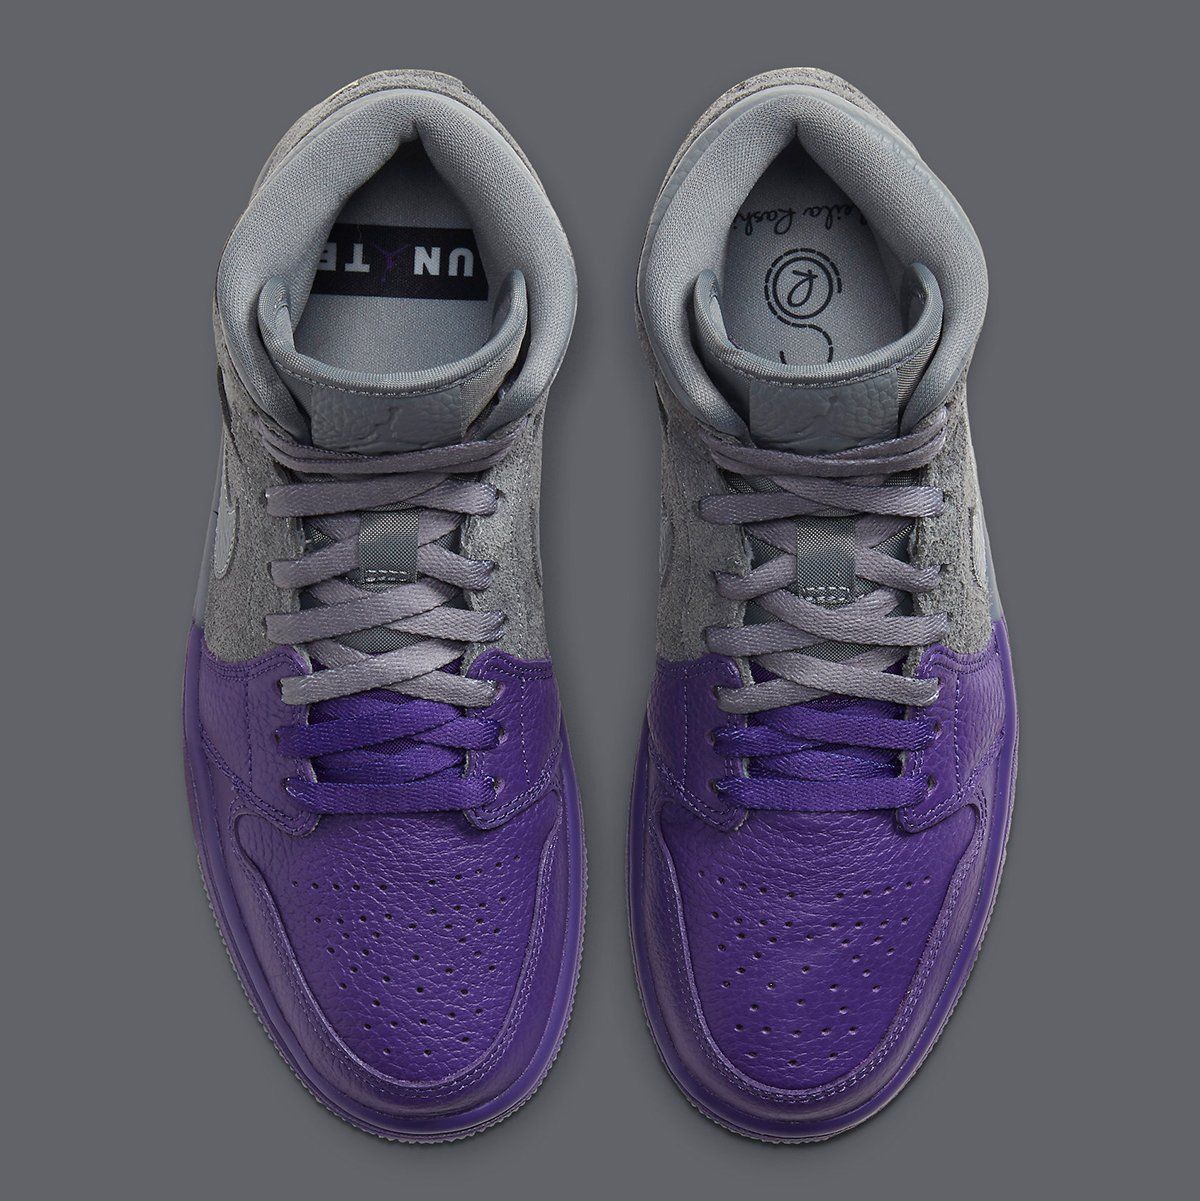 purple gray jordans